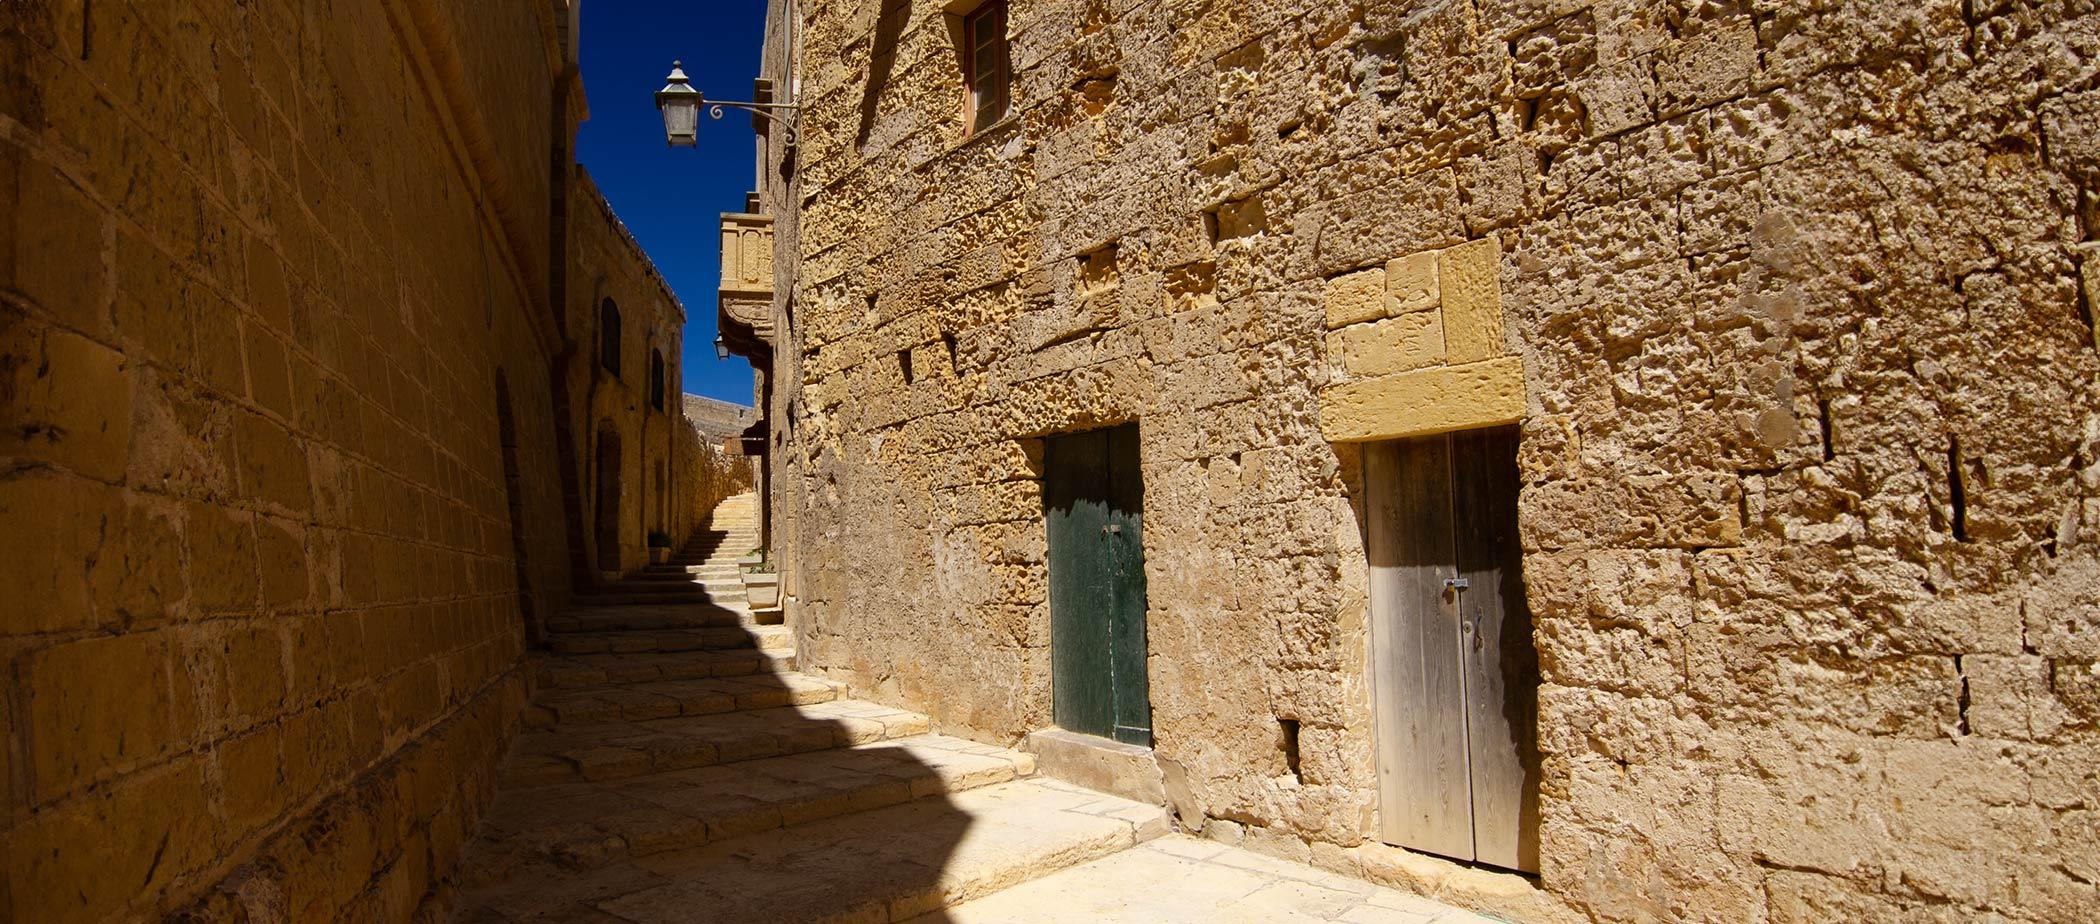 The Citadel, Island of Gozo, Malta